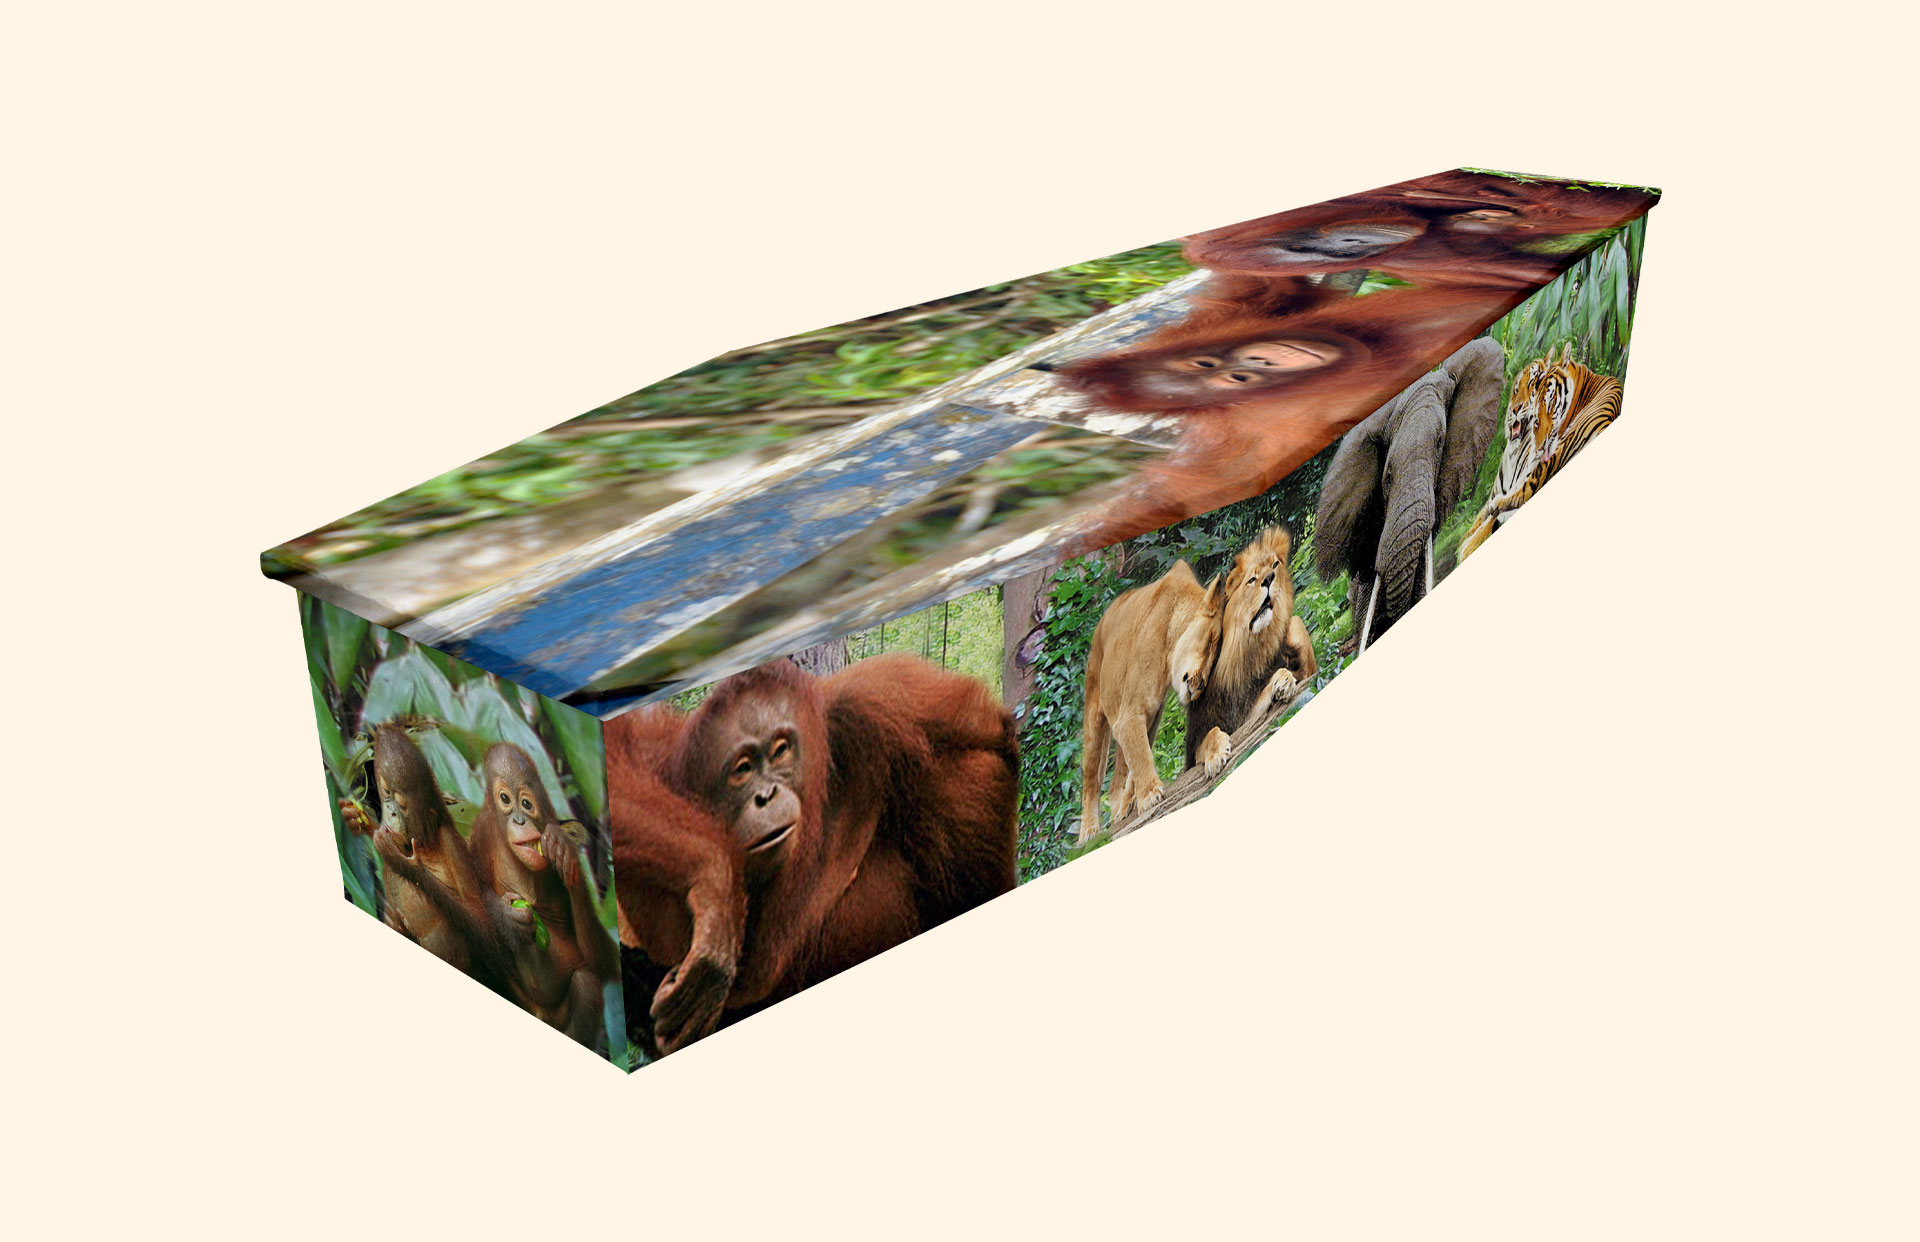 Jungle Love design on a cardboard coffin